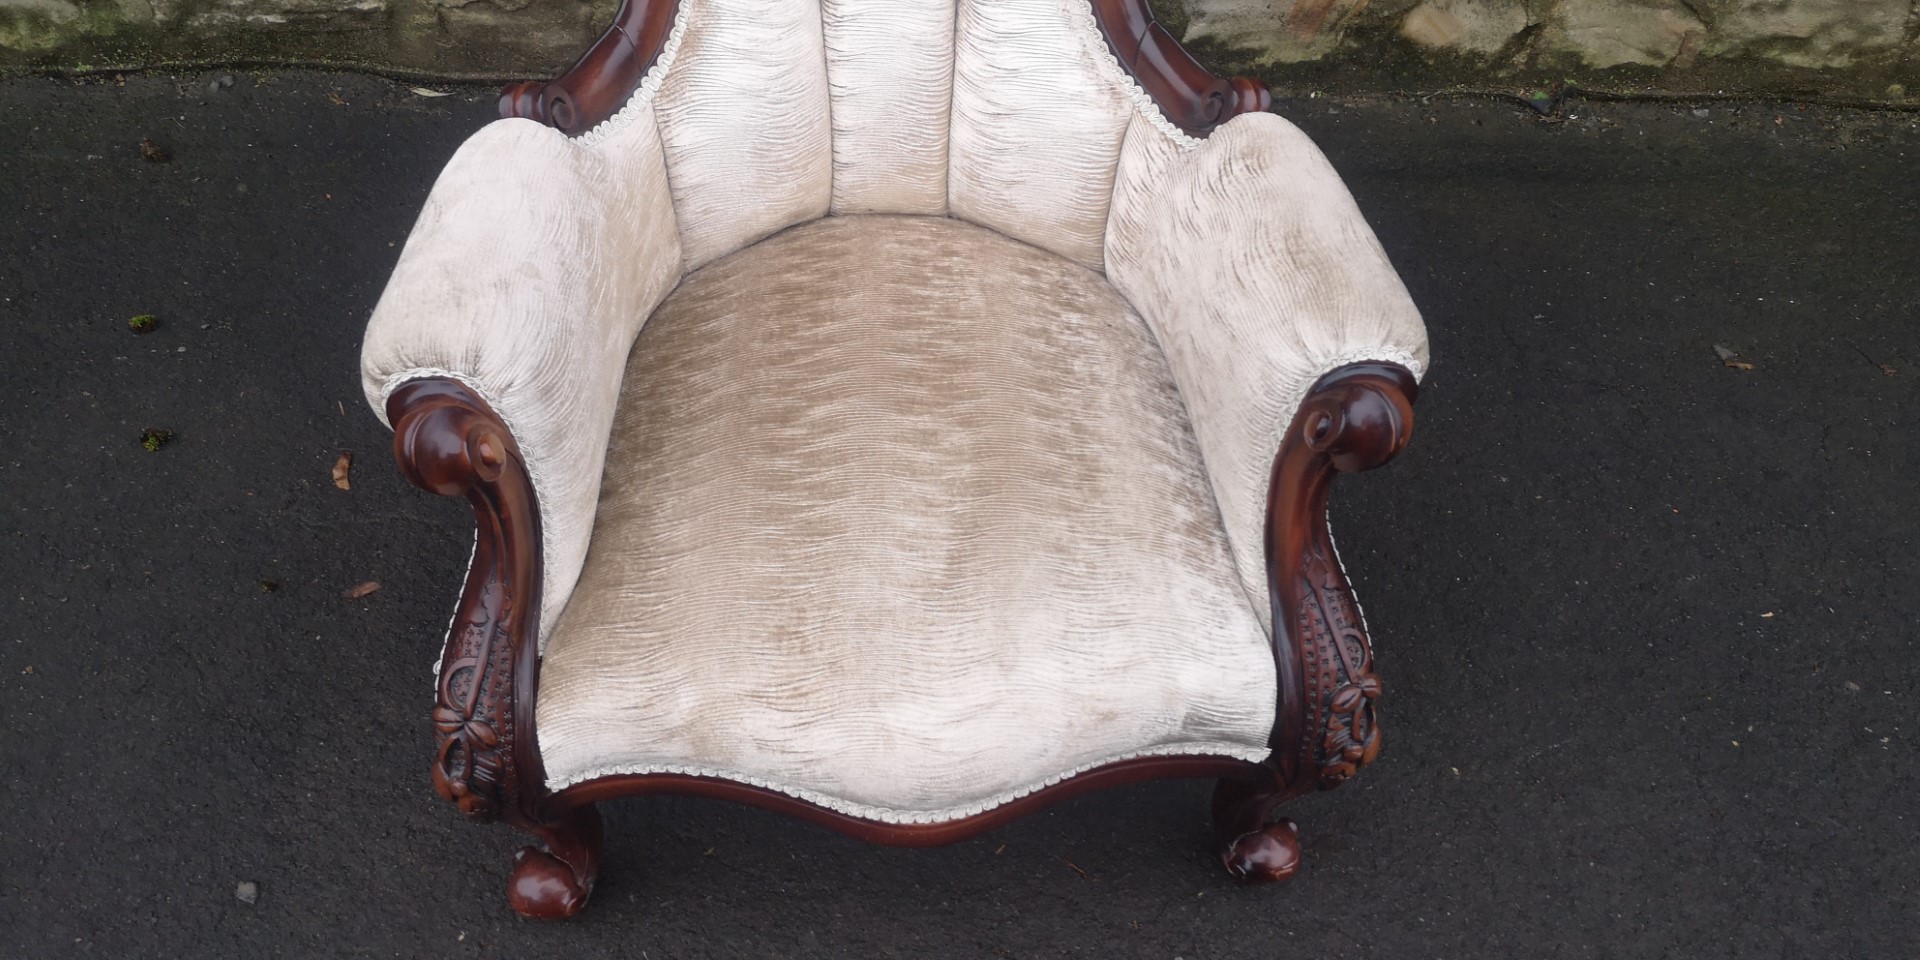 Mahogany sofa and chair (Chair)画像